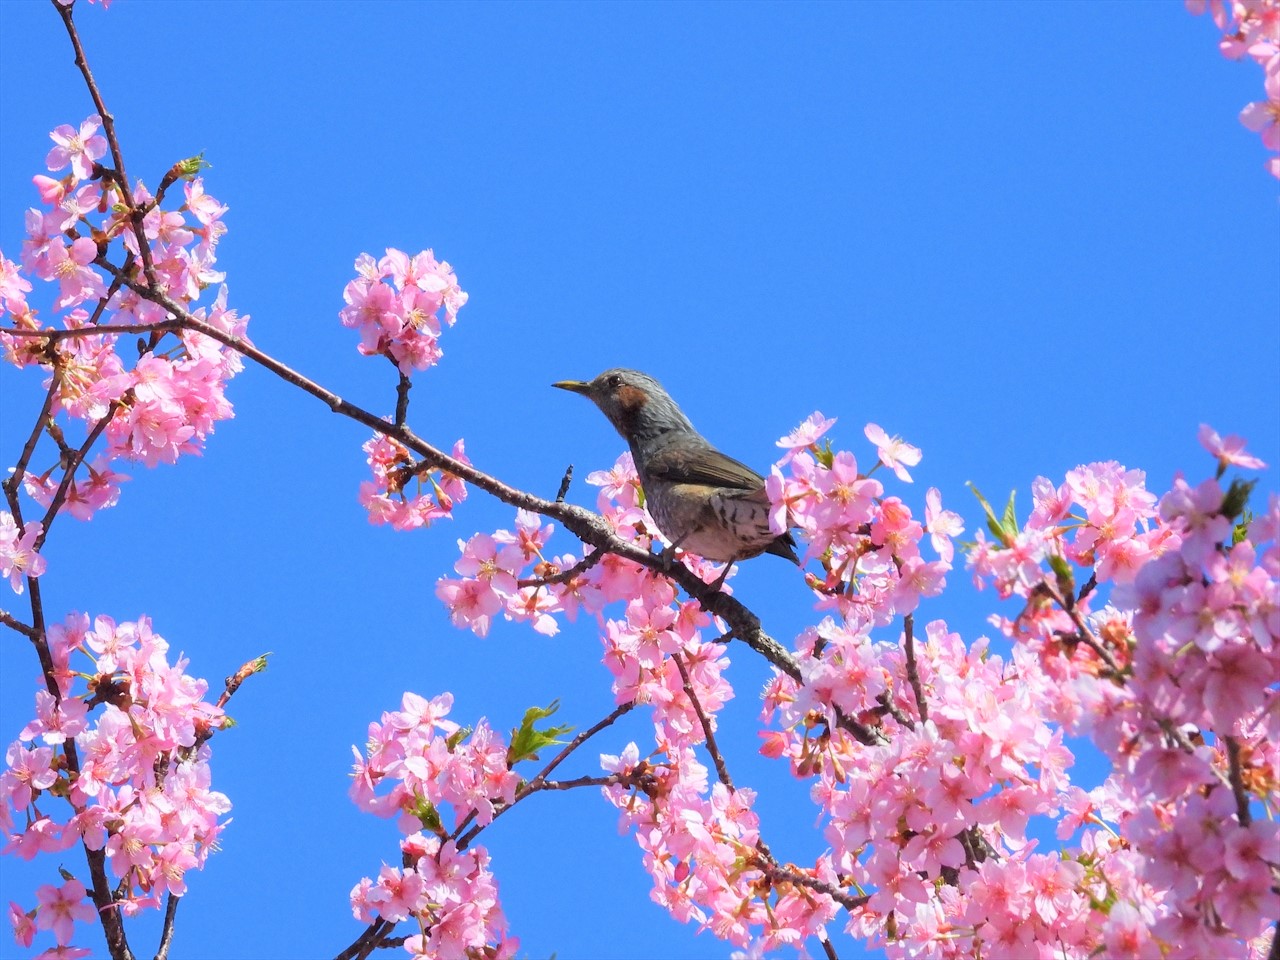 DSCN5828 (2)緋寒桜にヒヨドリ２０２２年３月１５日AM１０：２１